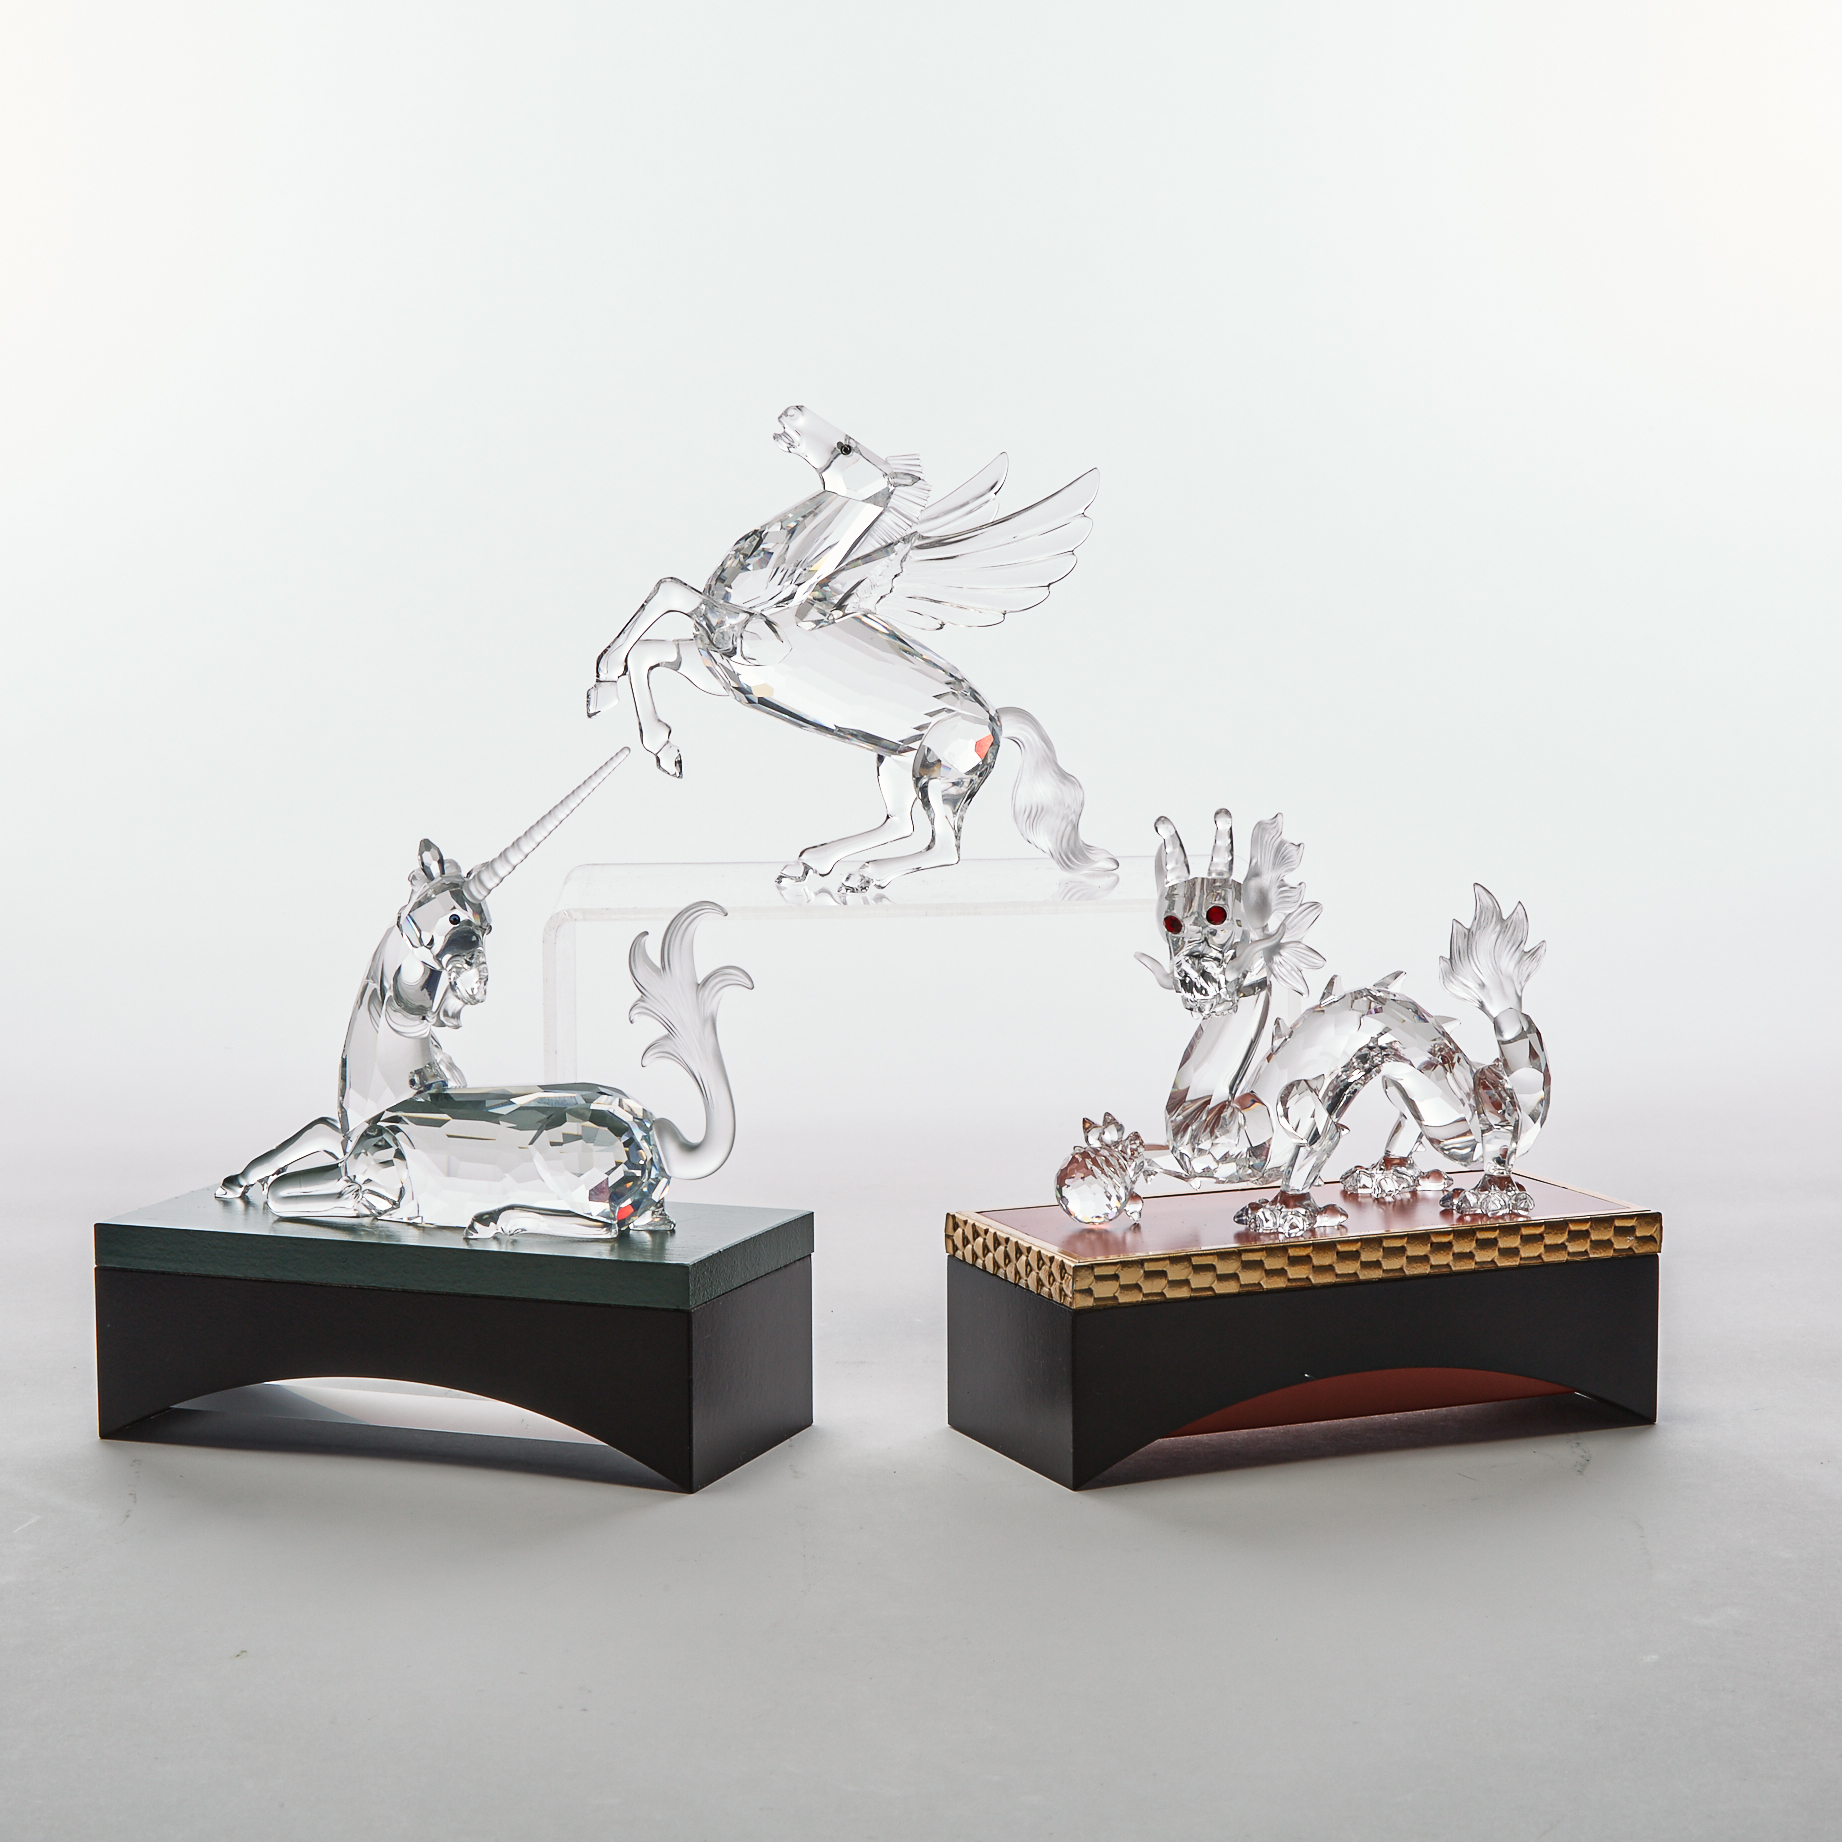 Swarovski Crystal 'Fabulous Creatures' Trilogy: Unicorn, Dragon, and Pegasus, 1996/1997/1998